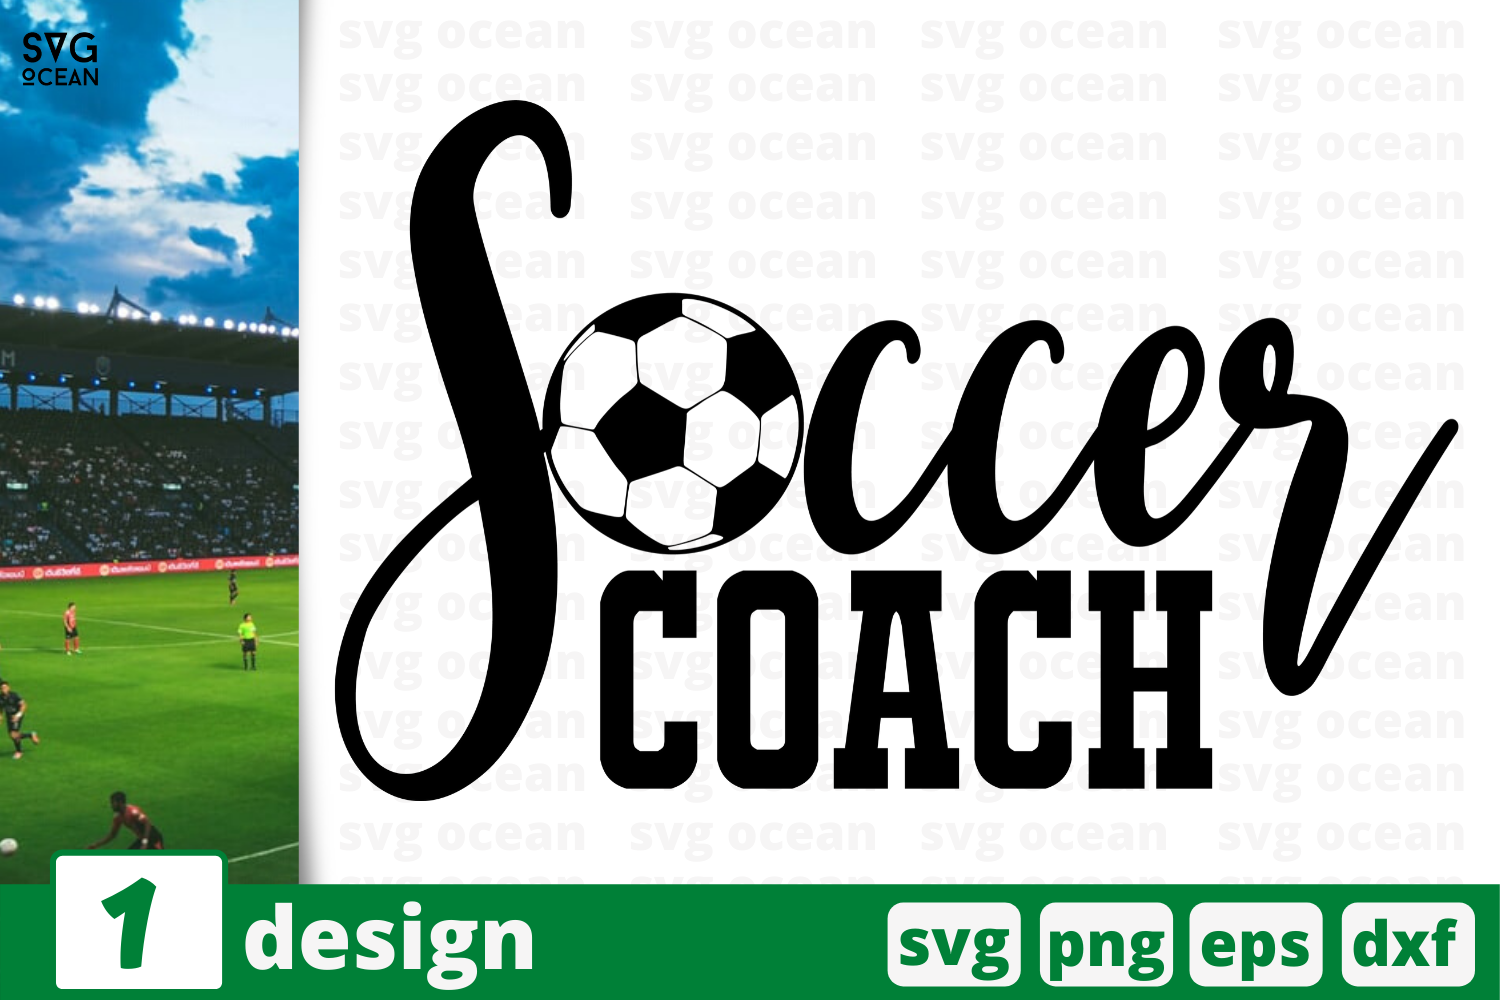 1 Soccer Coach Soccer Quote Cricut Svg By Svgocean Thehungryjpeg Com